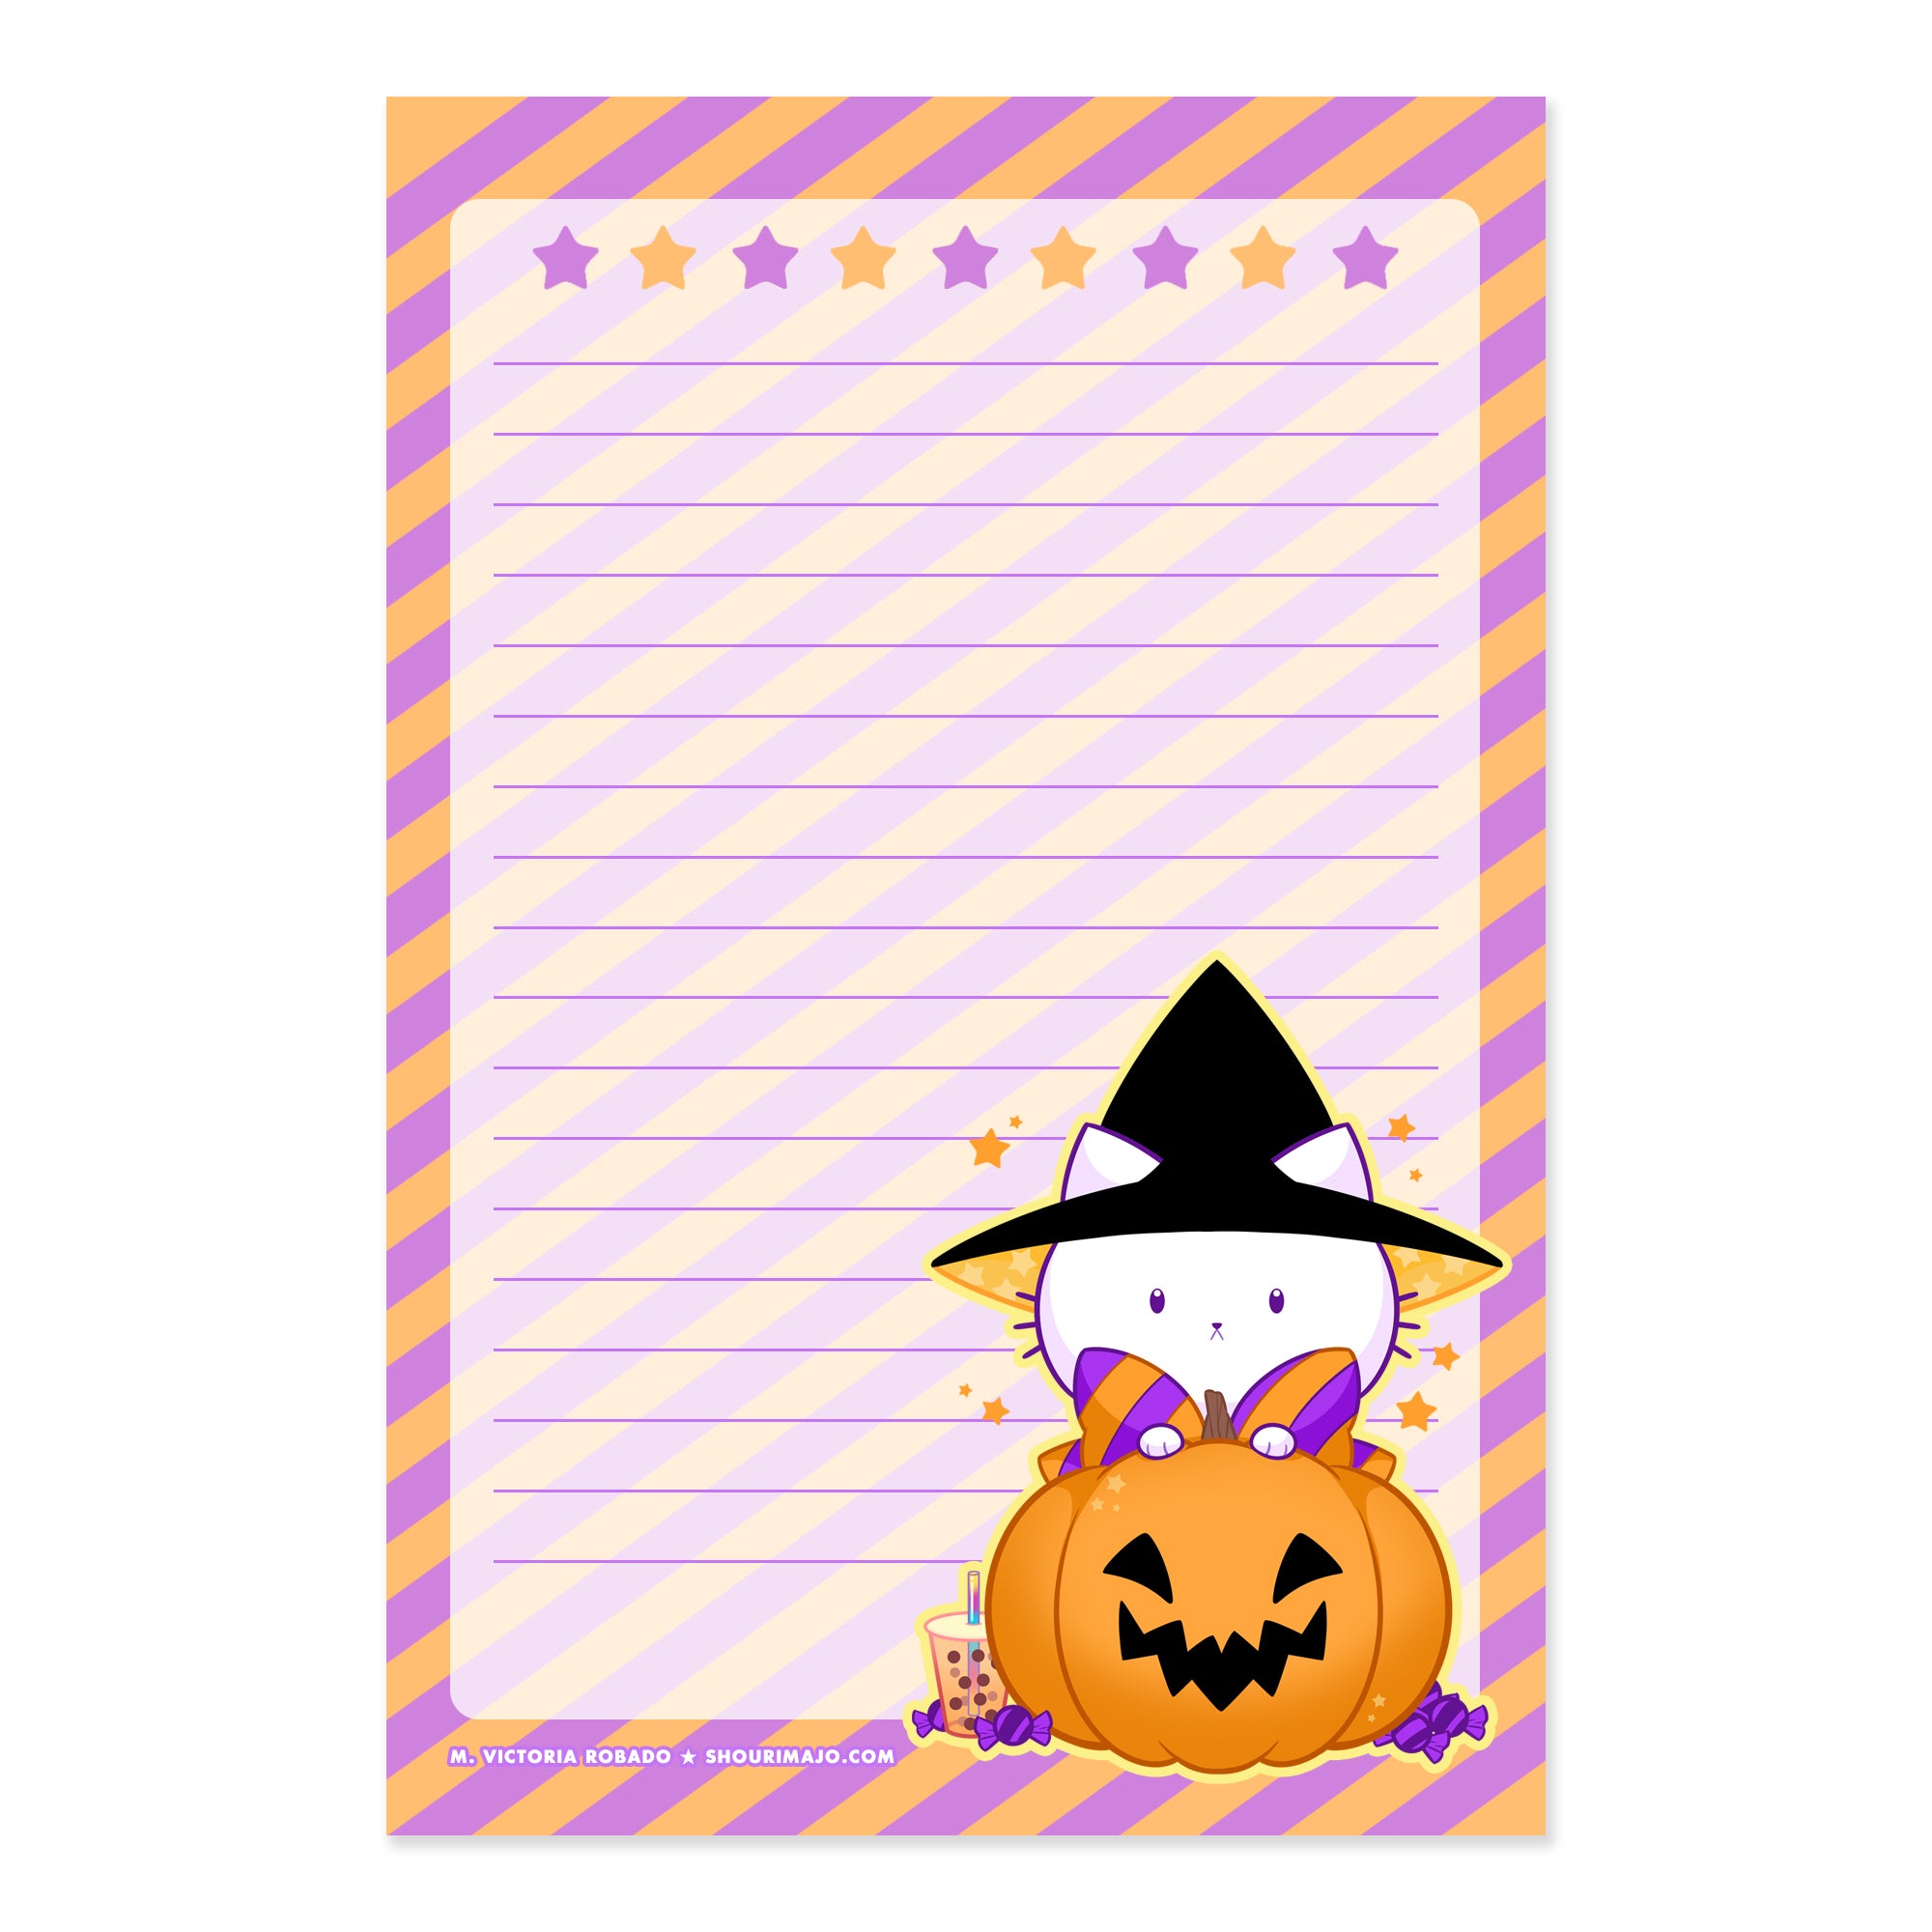 Bubble Kittea Halloween Stationery Paper